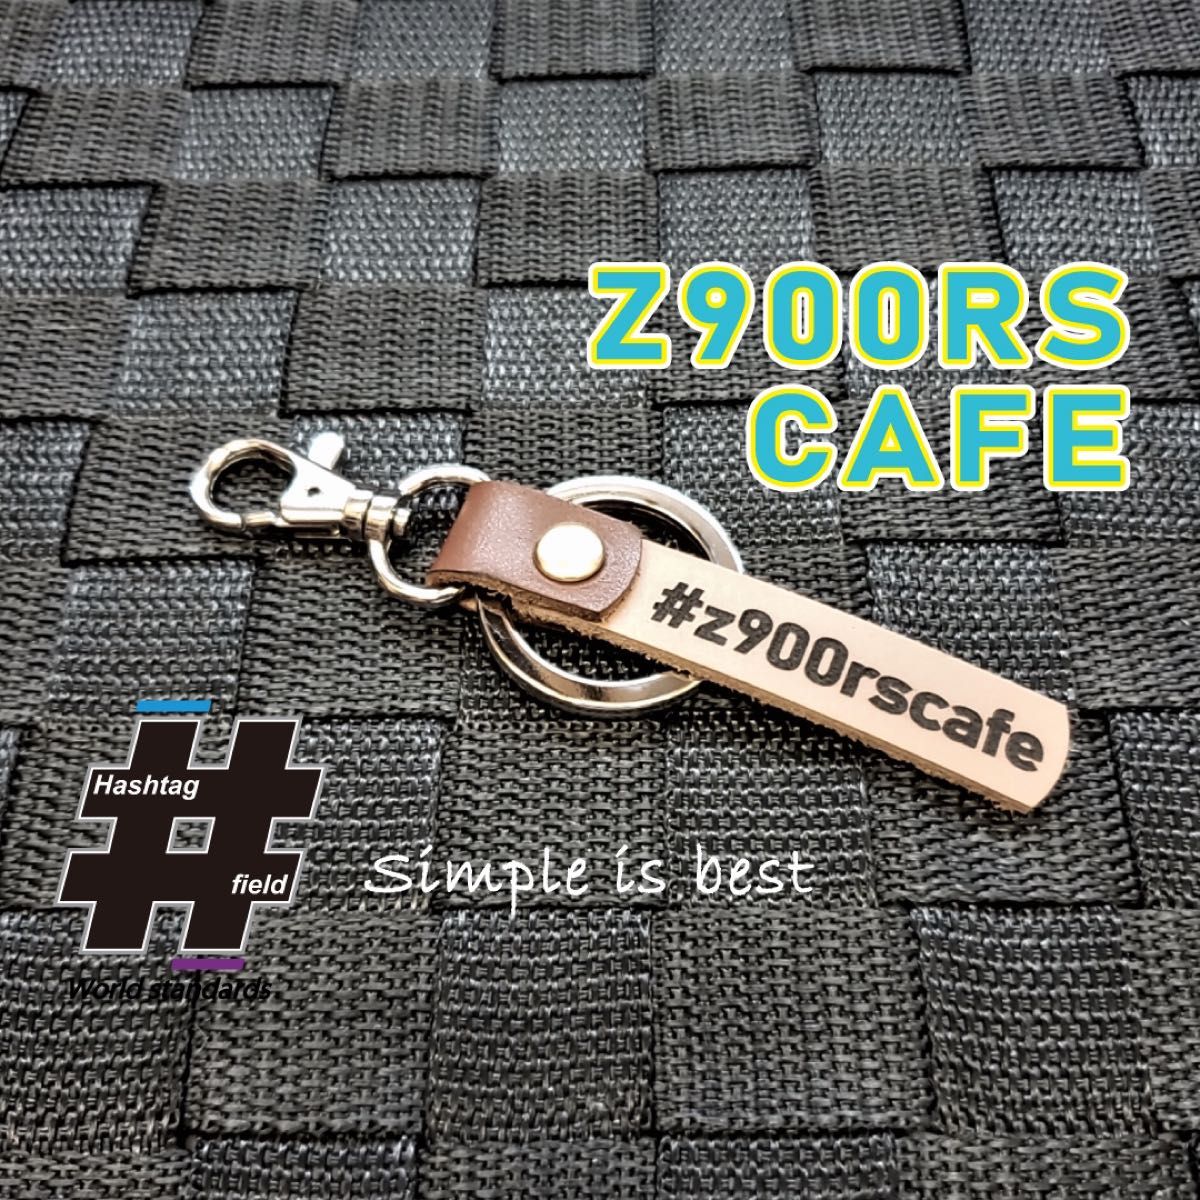 #Z900 RS CAFE 本革ハンドメイド ハッシュタグチャームキーホルダー